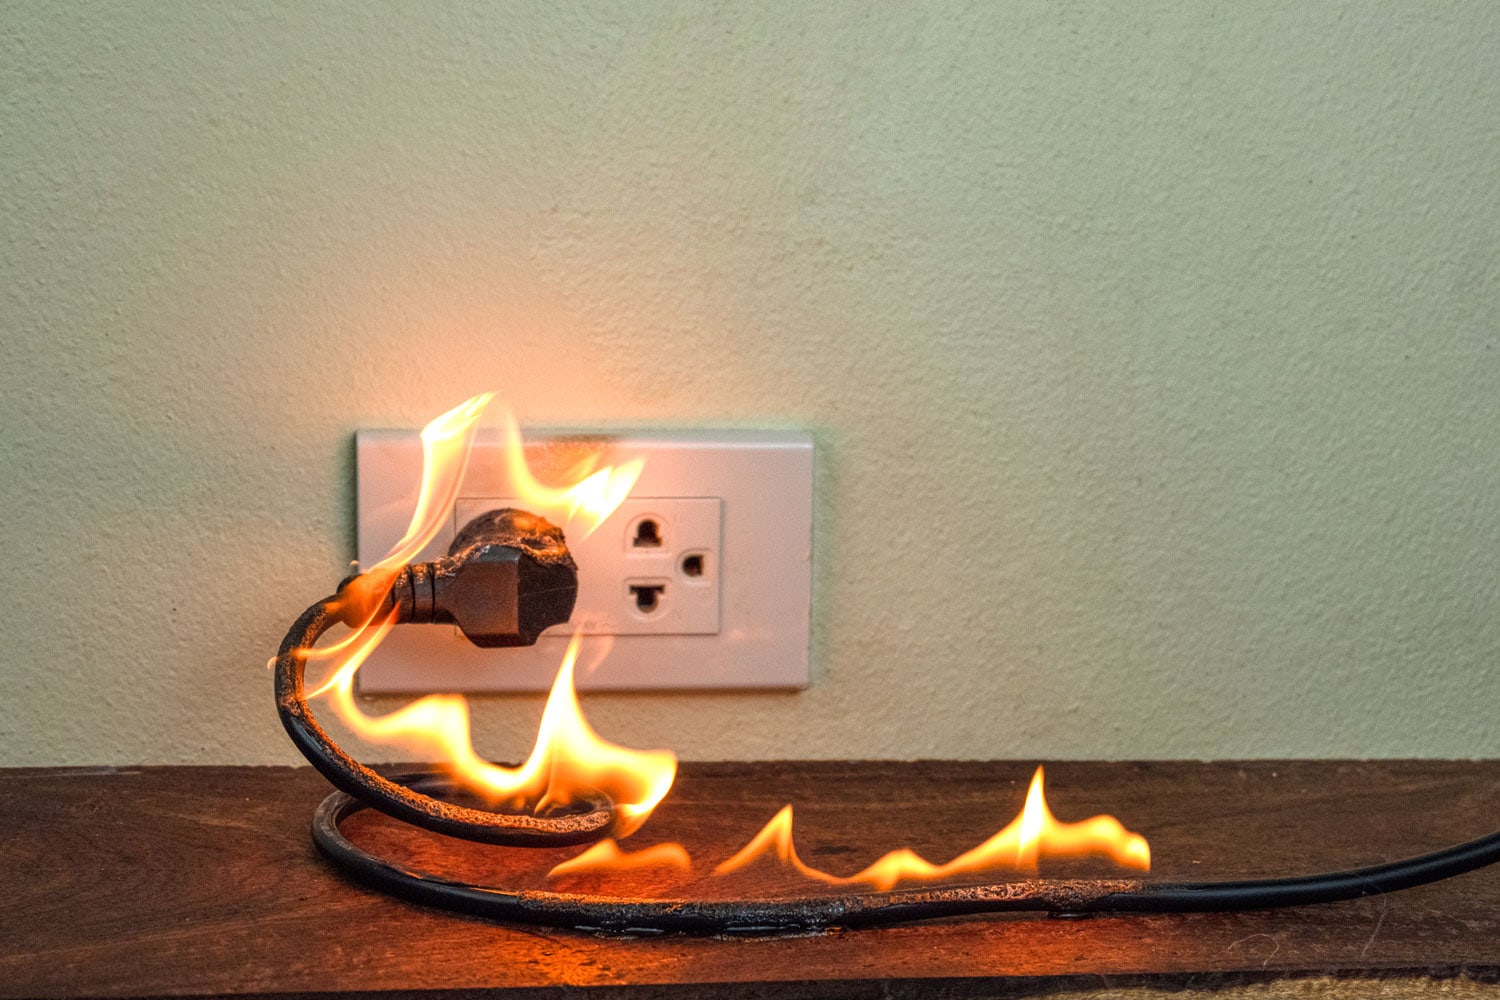 Plug burning due to overkill